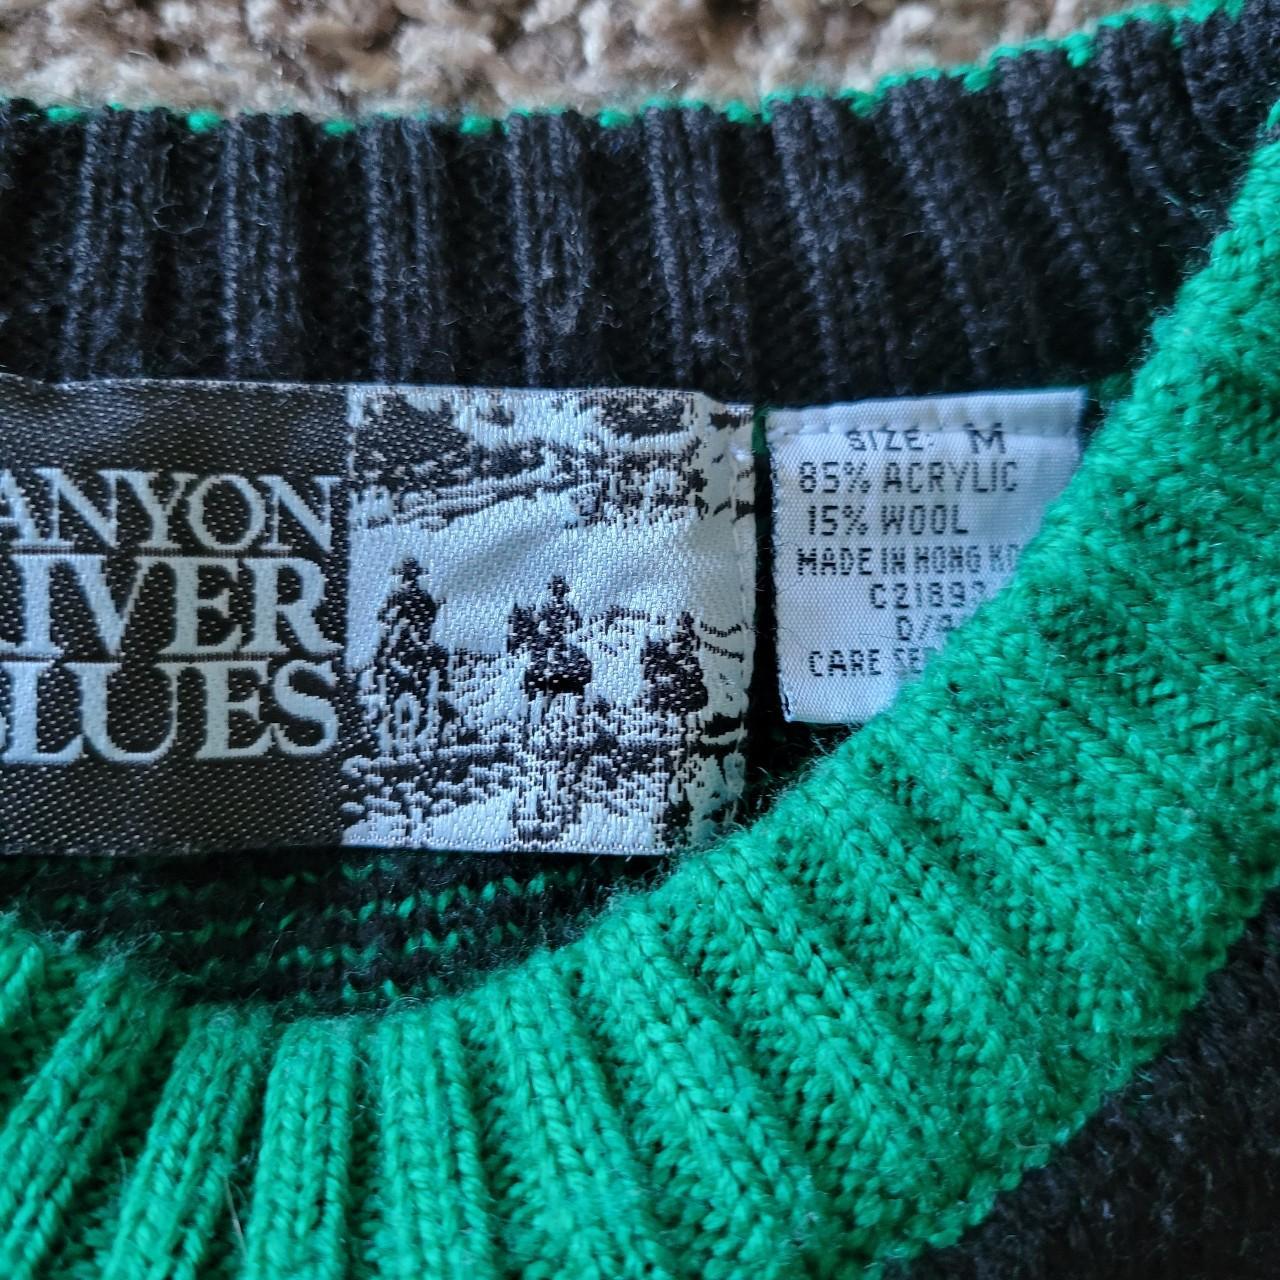 Canyon River Blues Men's Green and Black Jumper | Depop